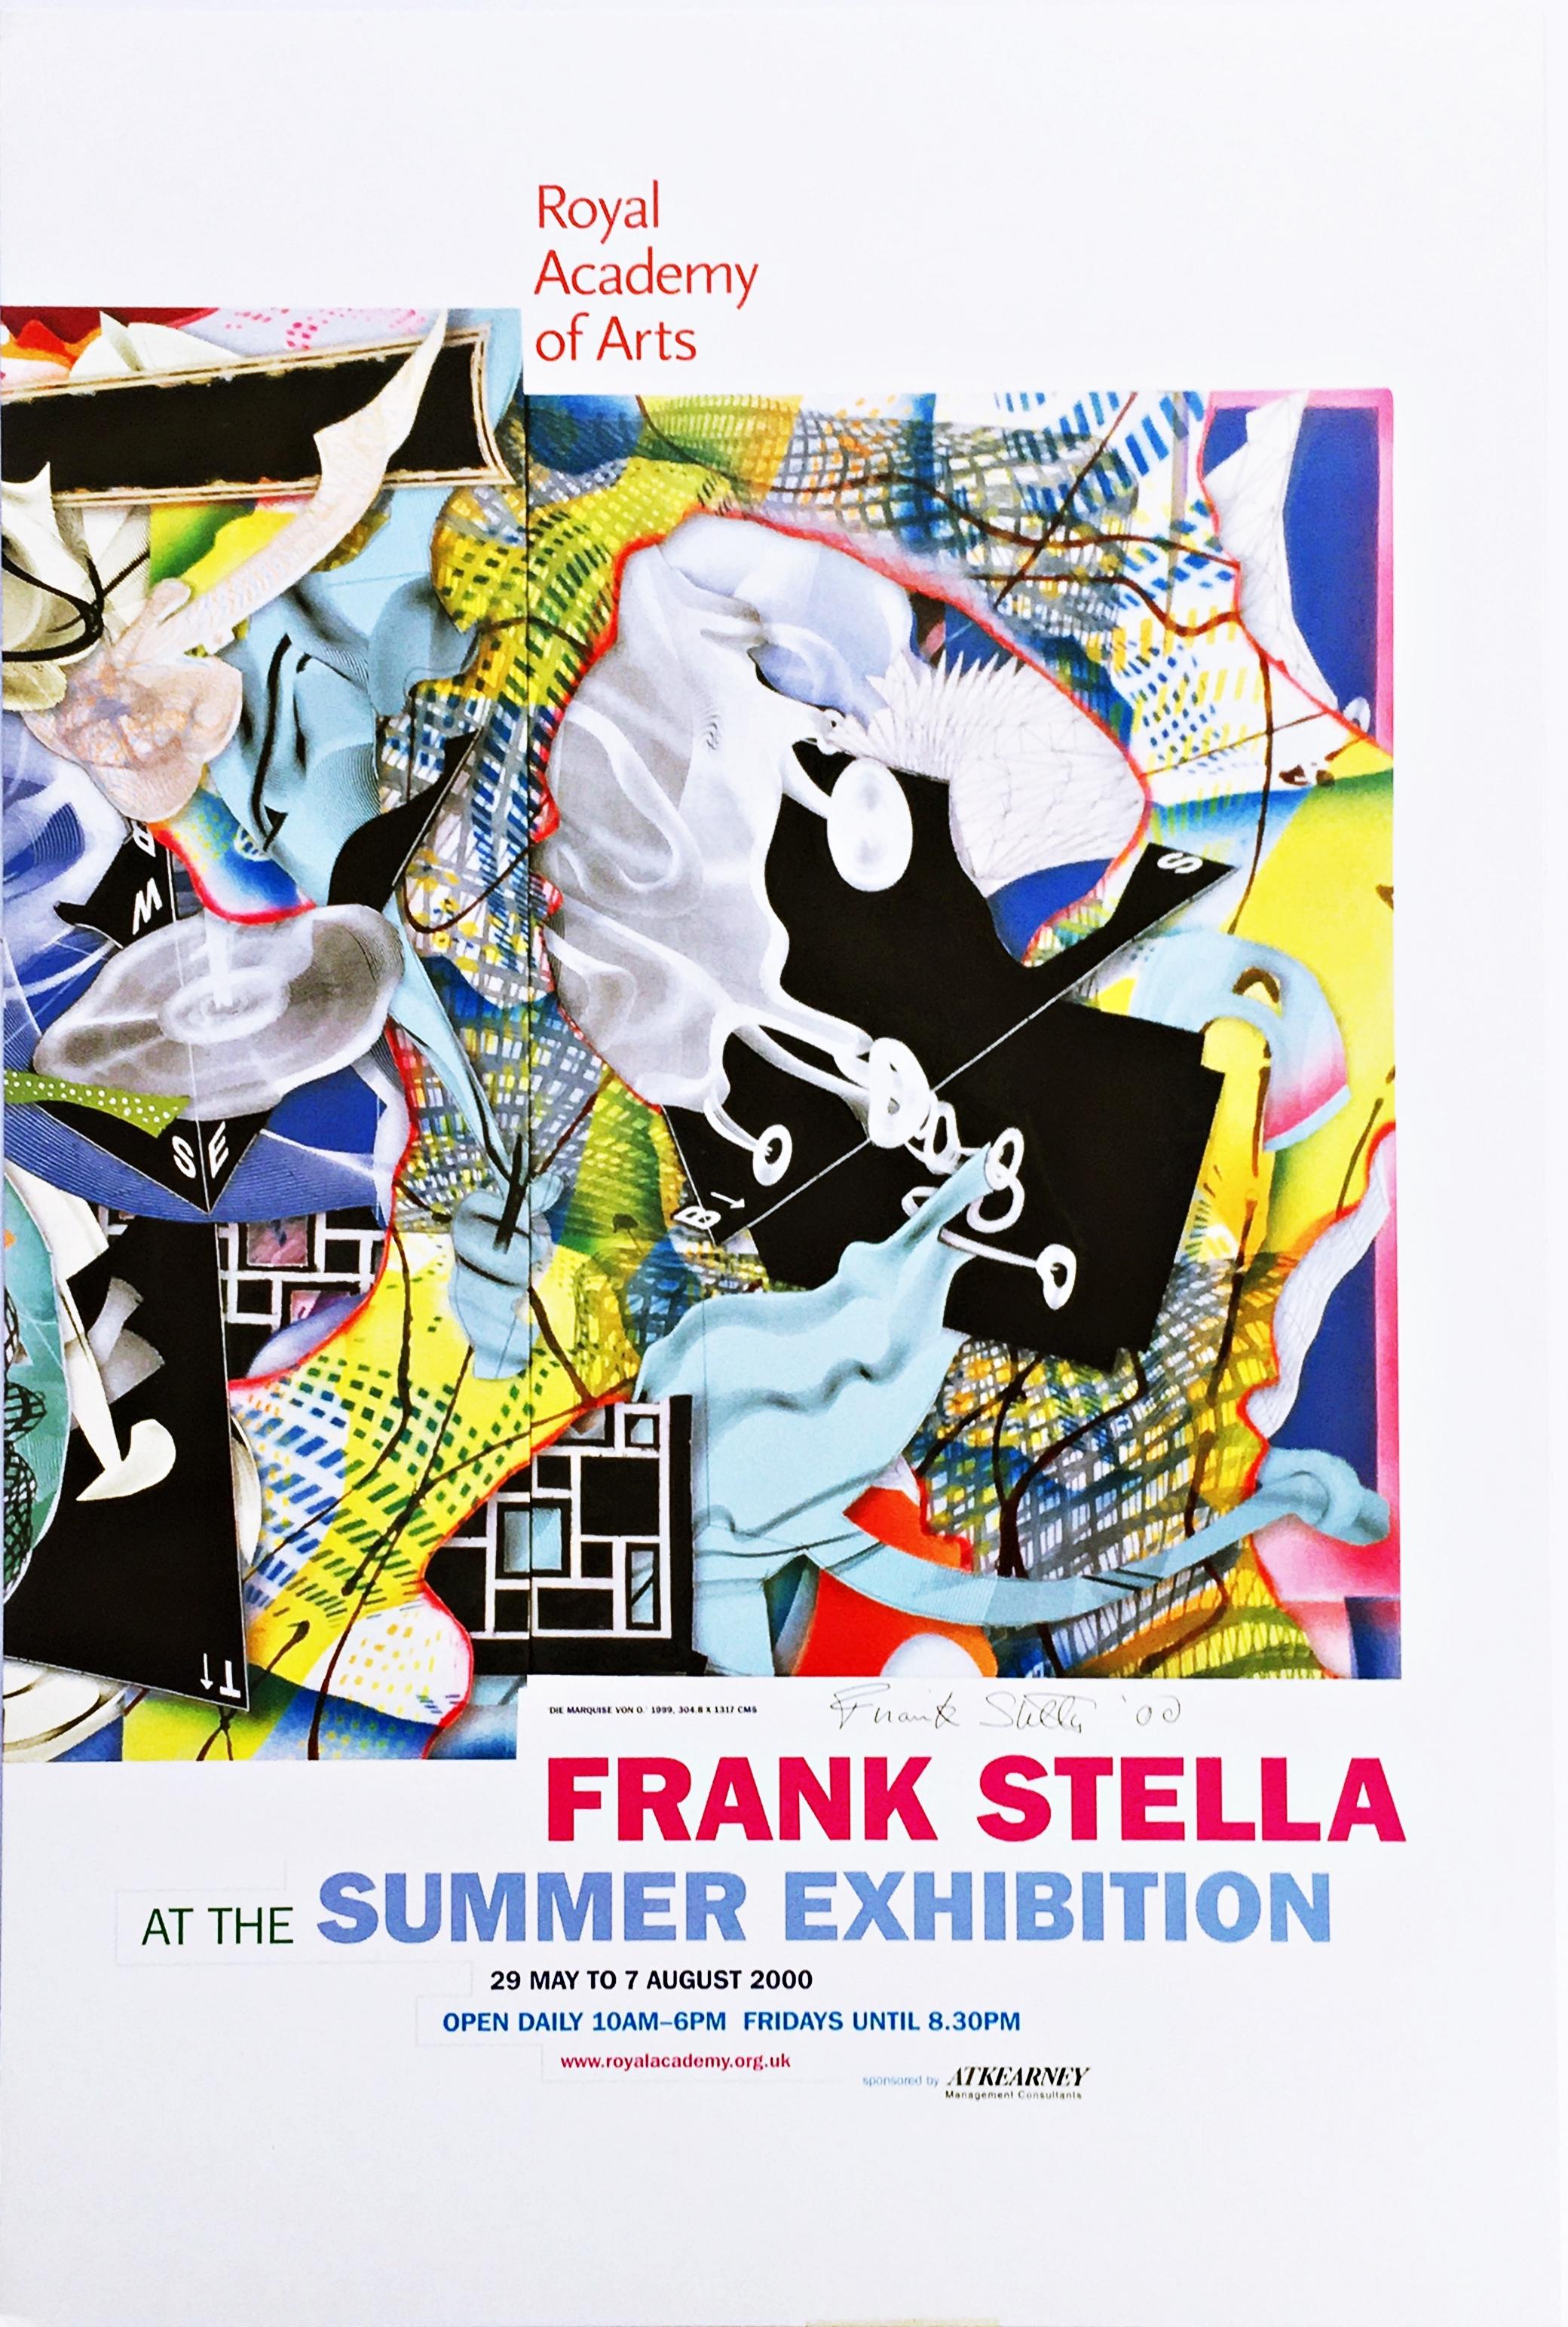 Frank Stella, Royal Academy of Arts (signature manuscrite)